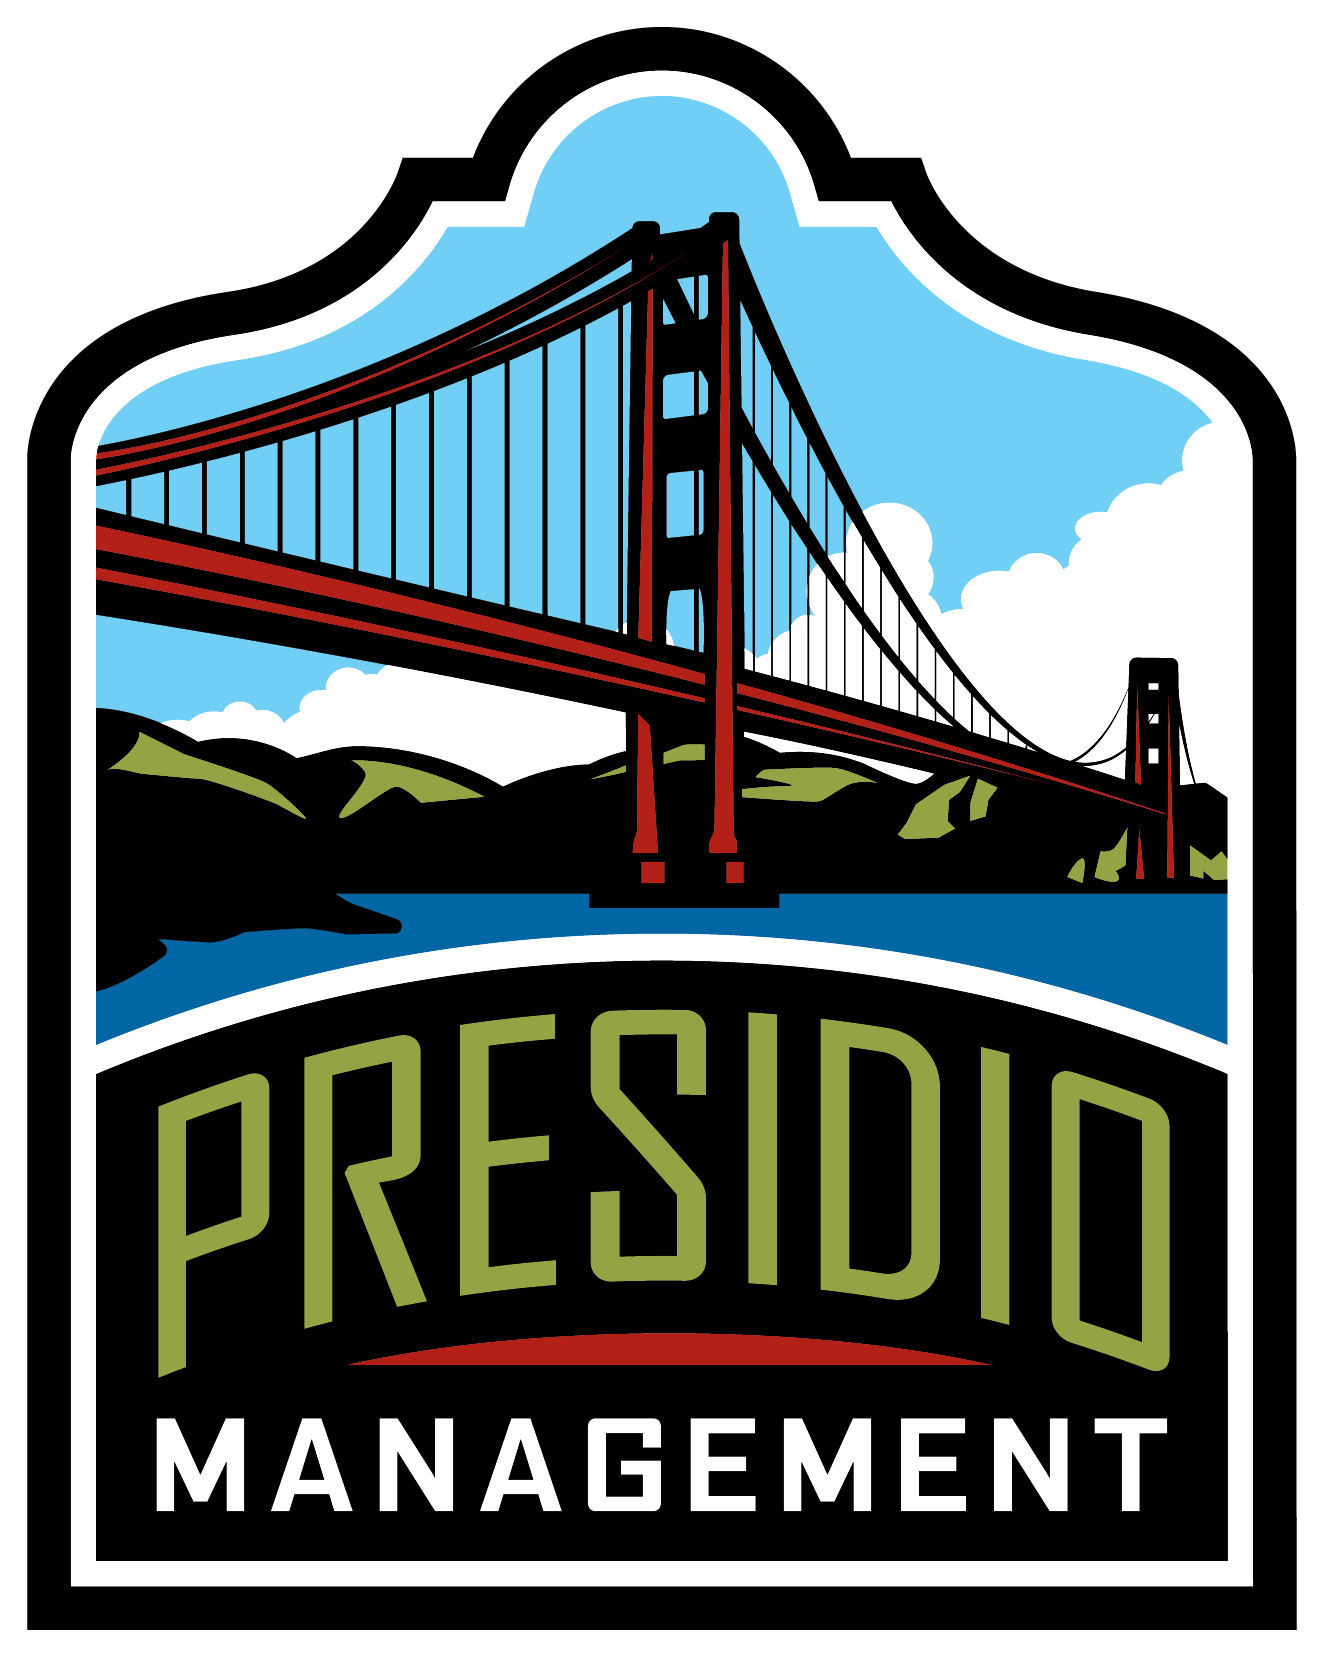 Presidio Management | Marketing, Management, & Consulting